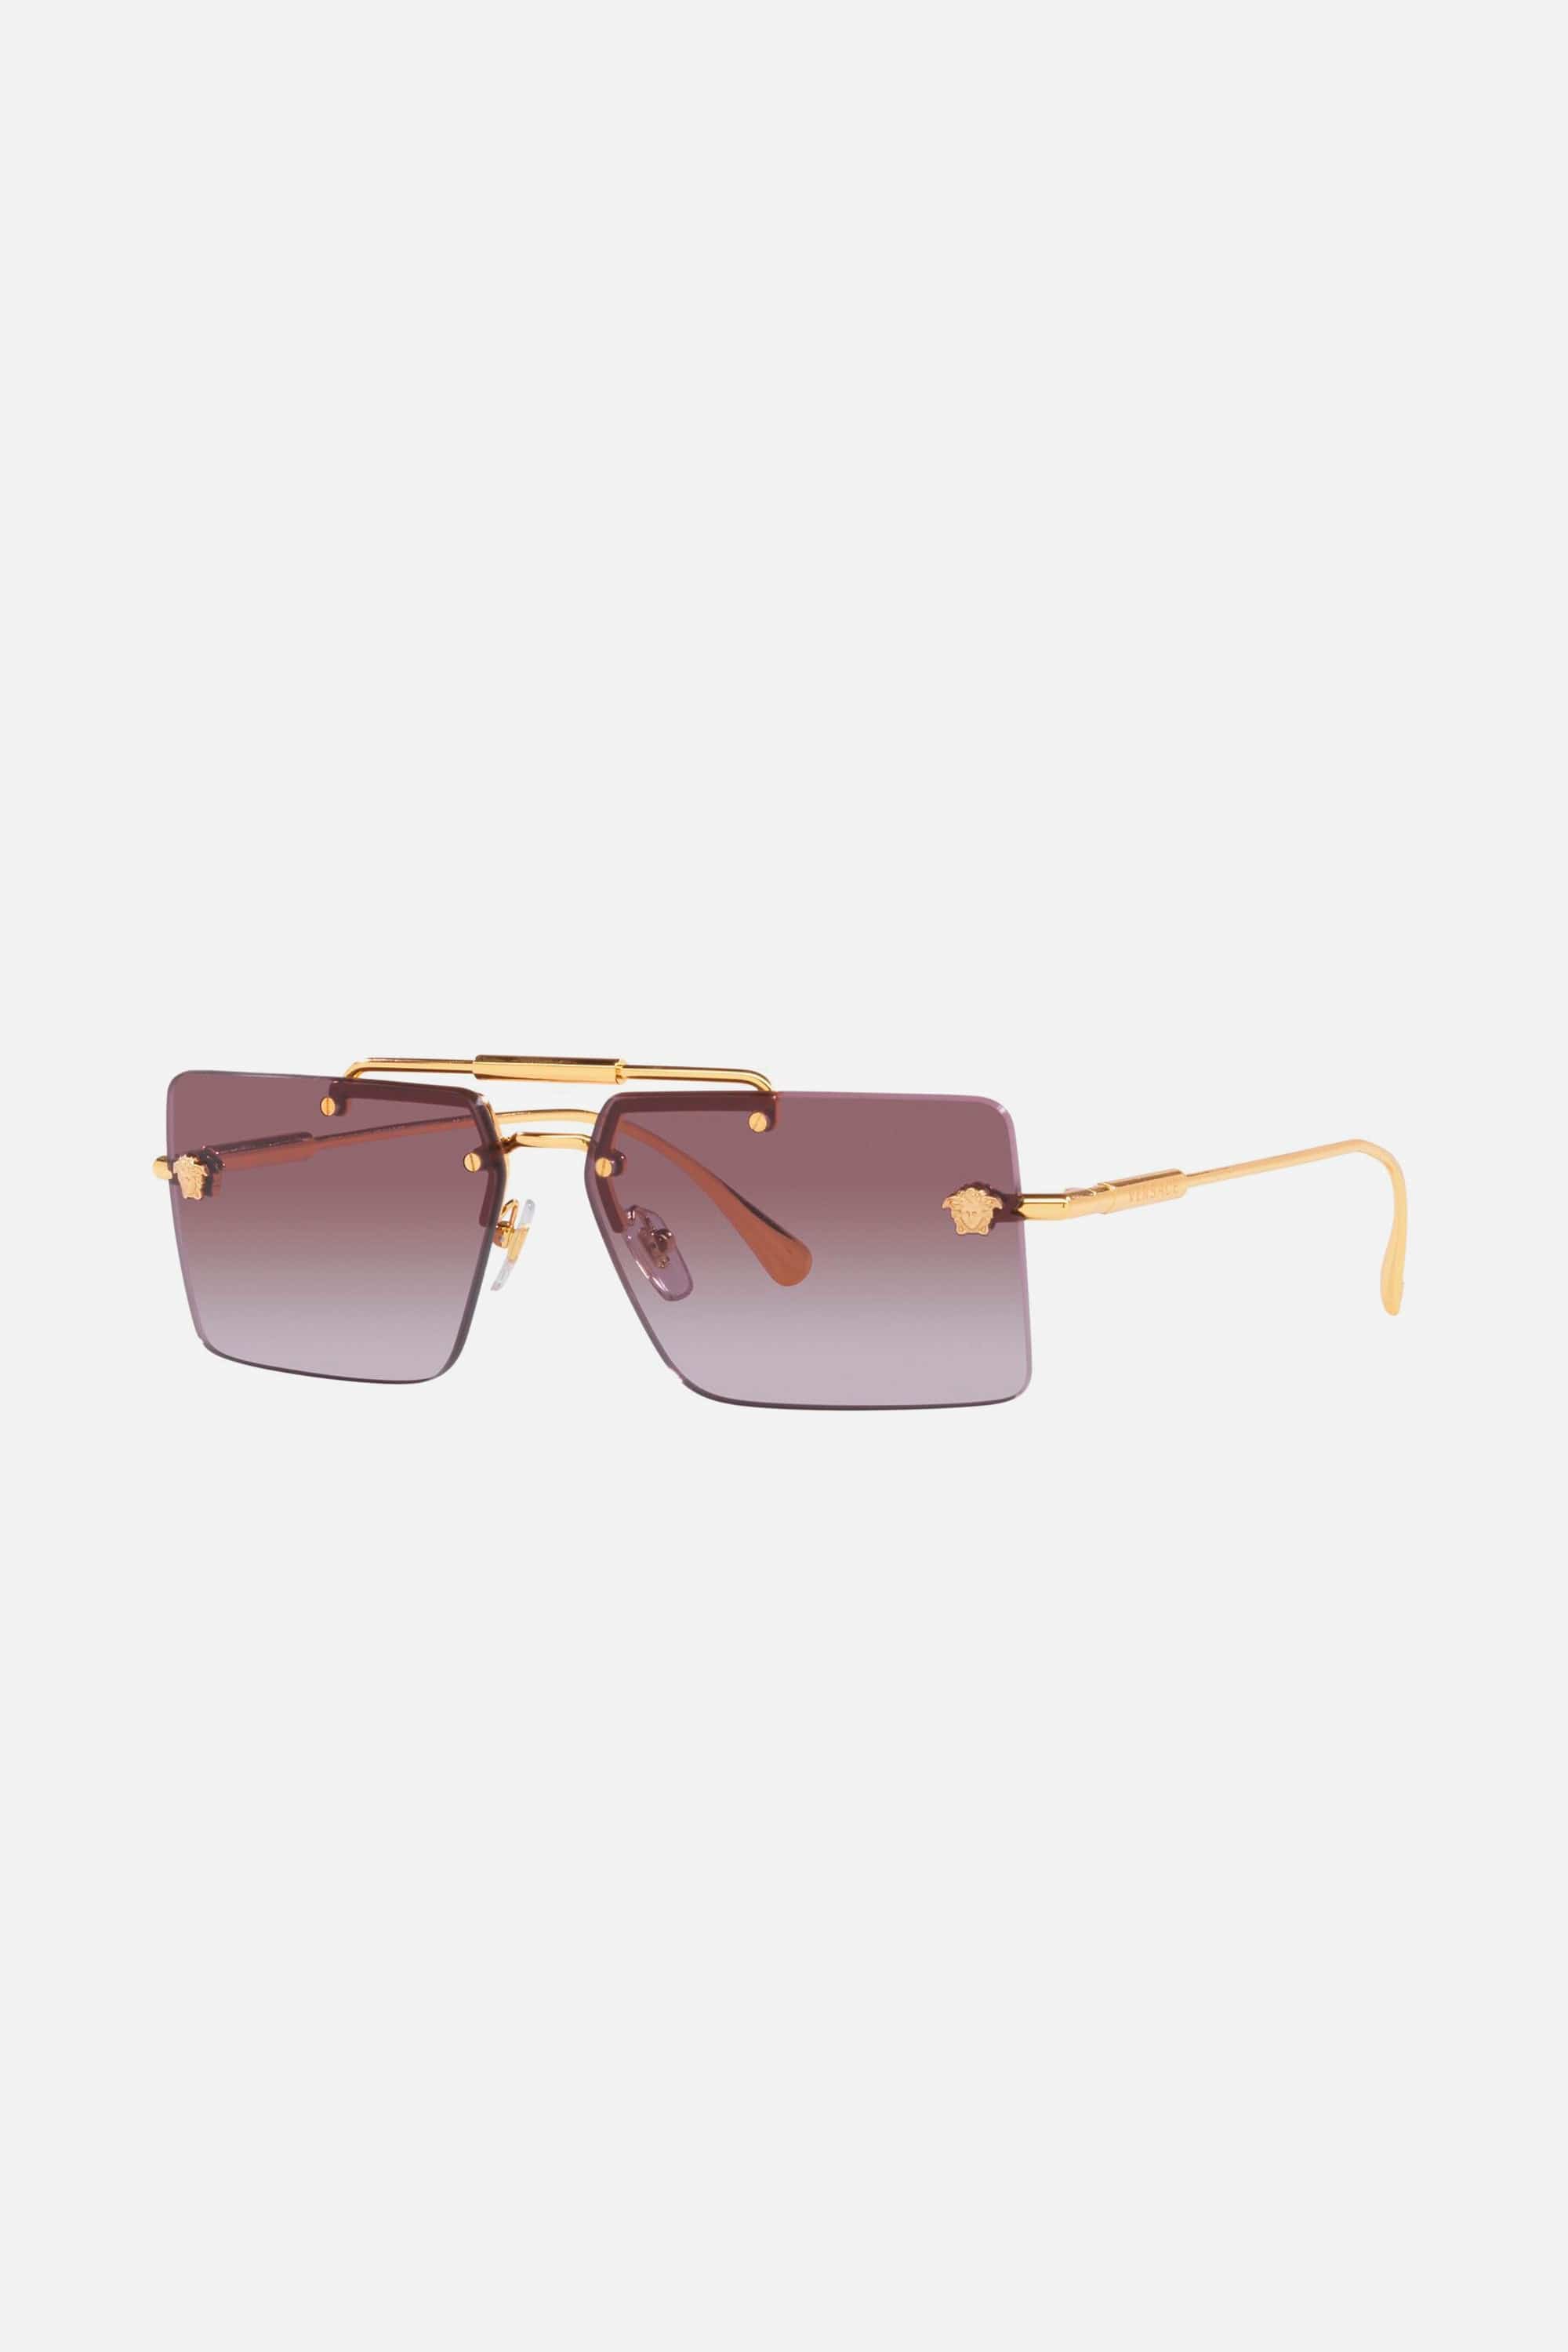 Versace gold pilot sunglasses with light purple mirror - Eyewear Club